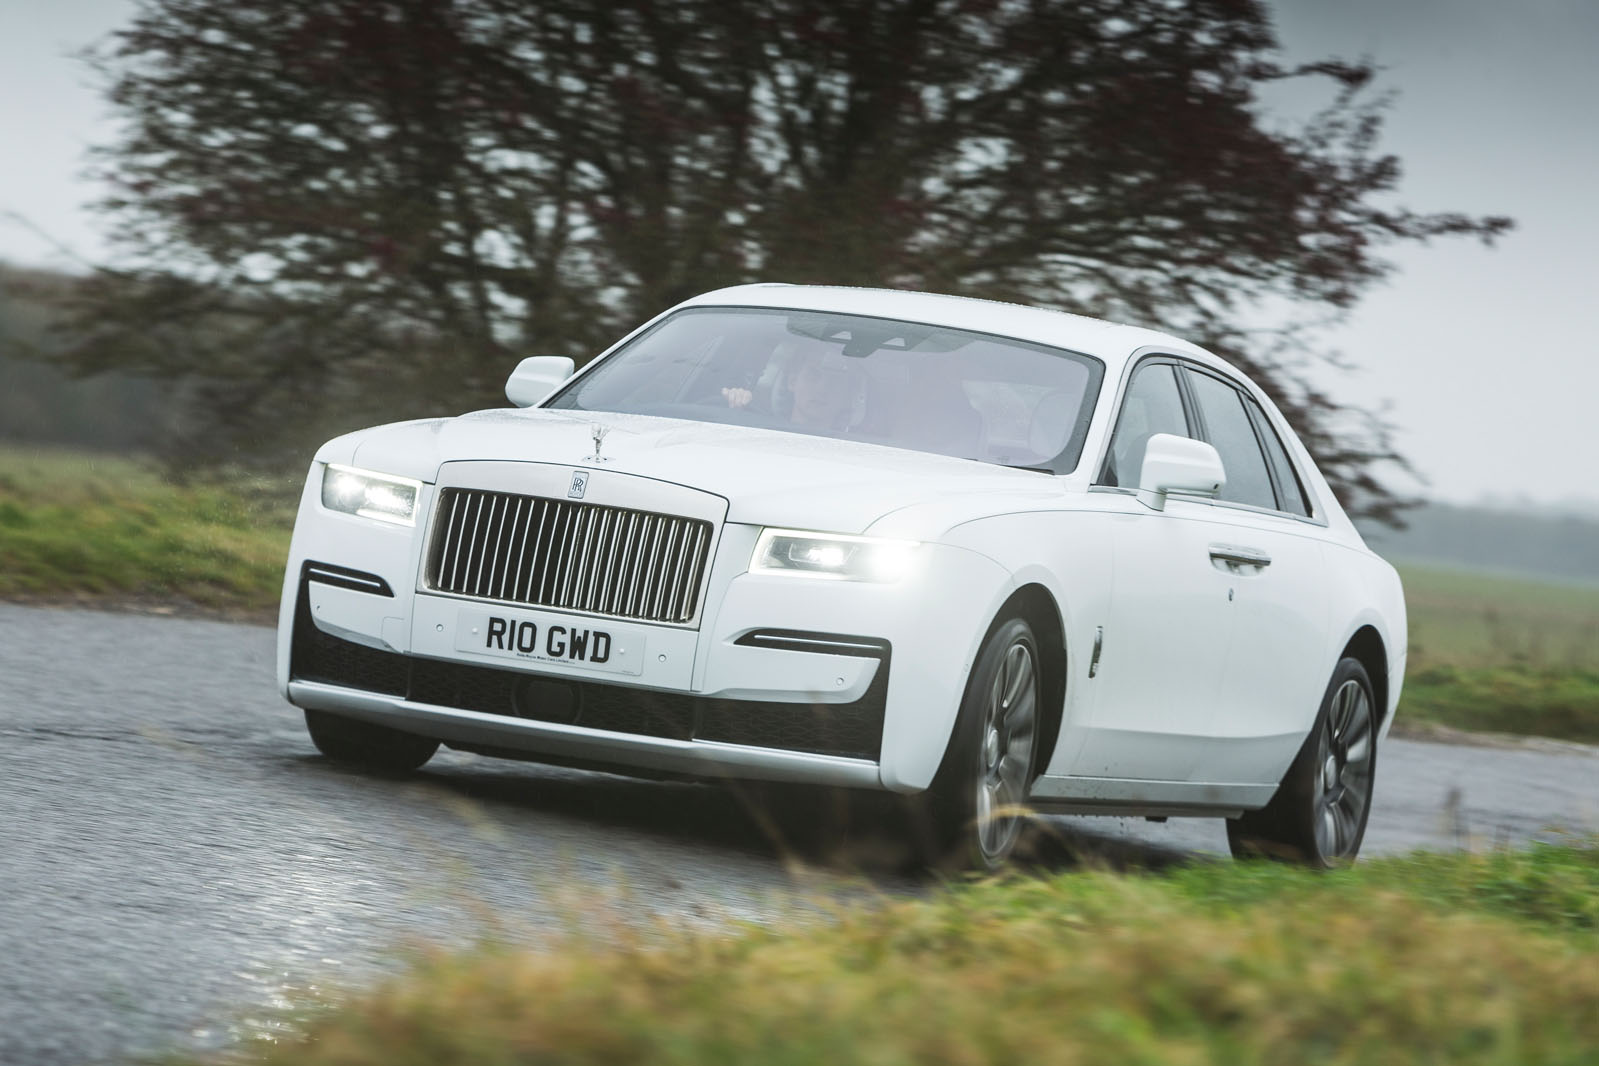 Check Out Rolls-Royce's Stunning New Phantom